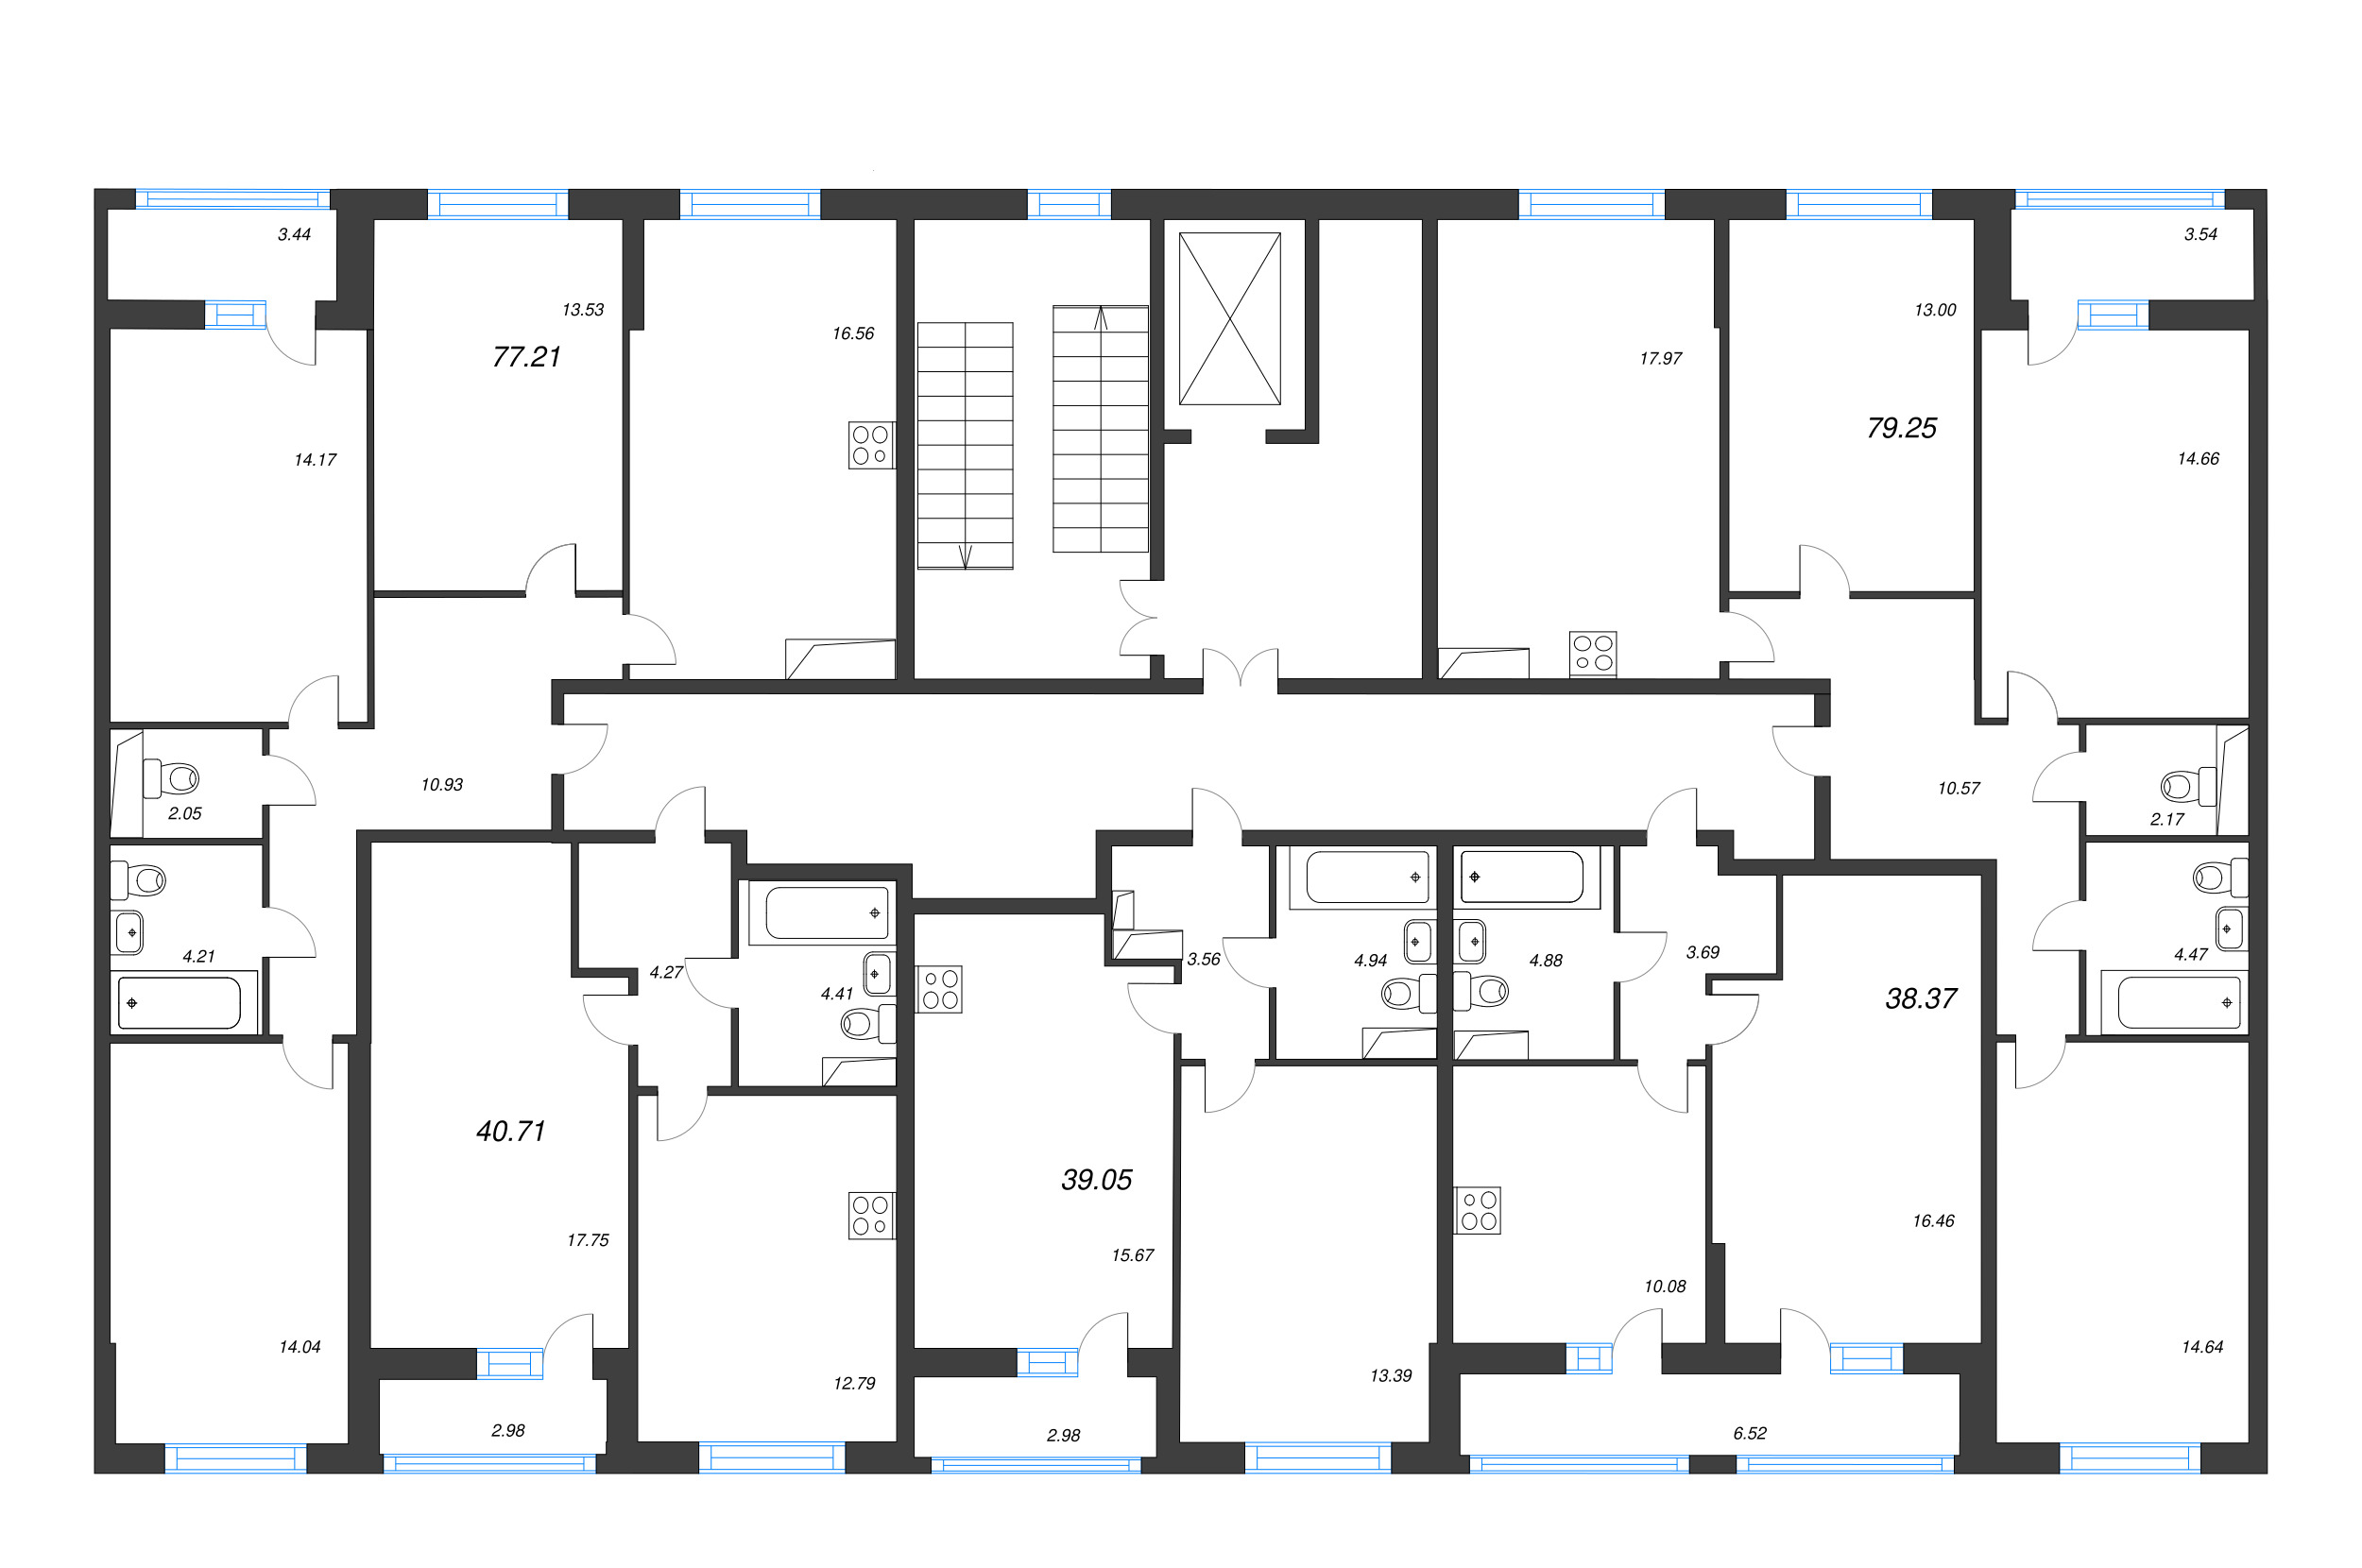 4-комнатная (Евро) квартира, 79.25 м² - планировка этажа